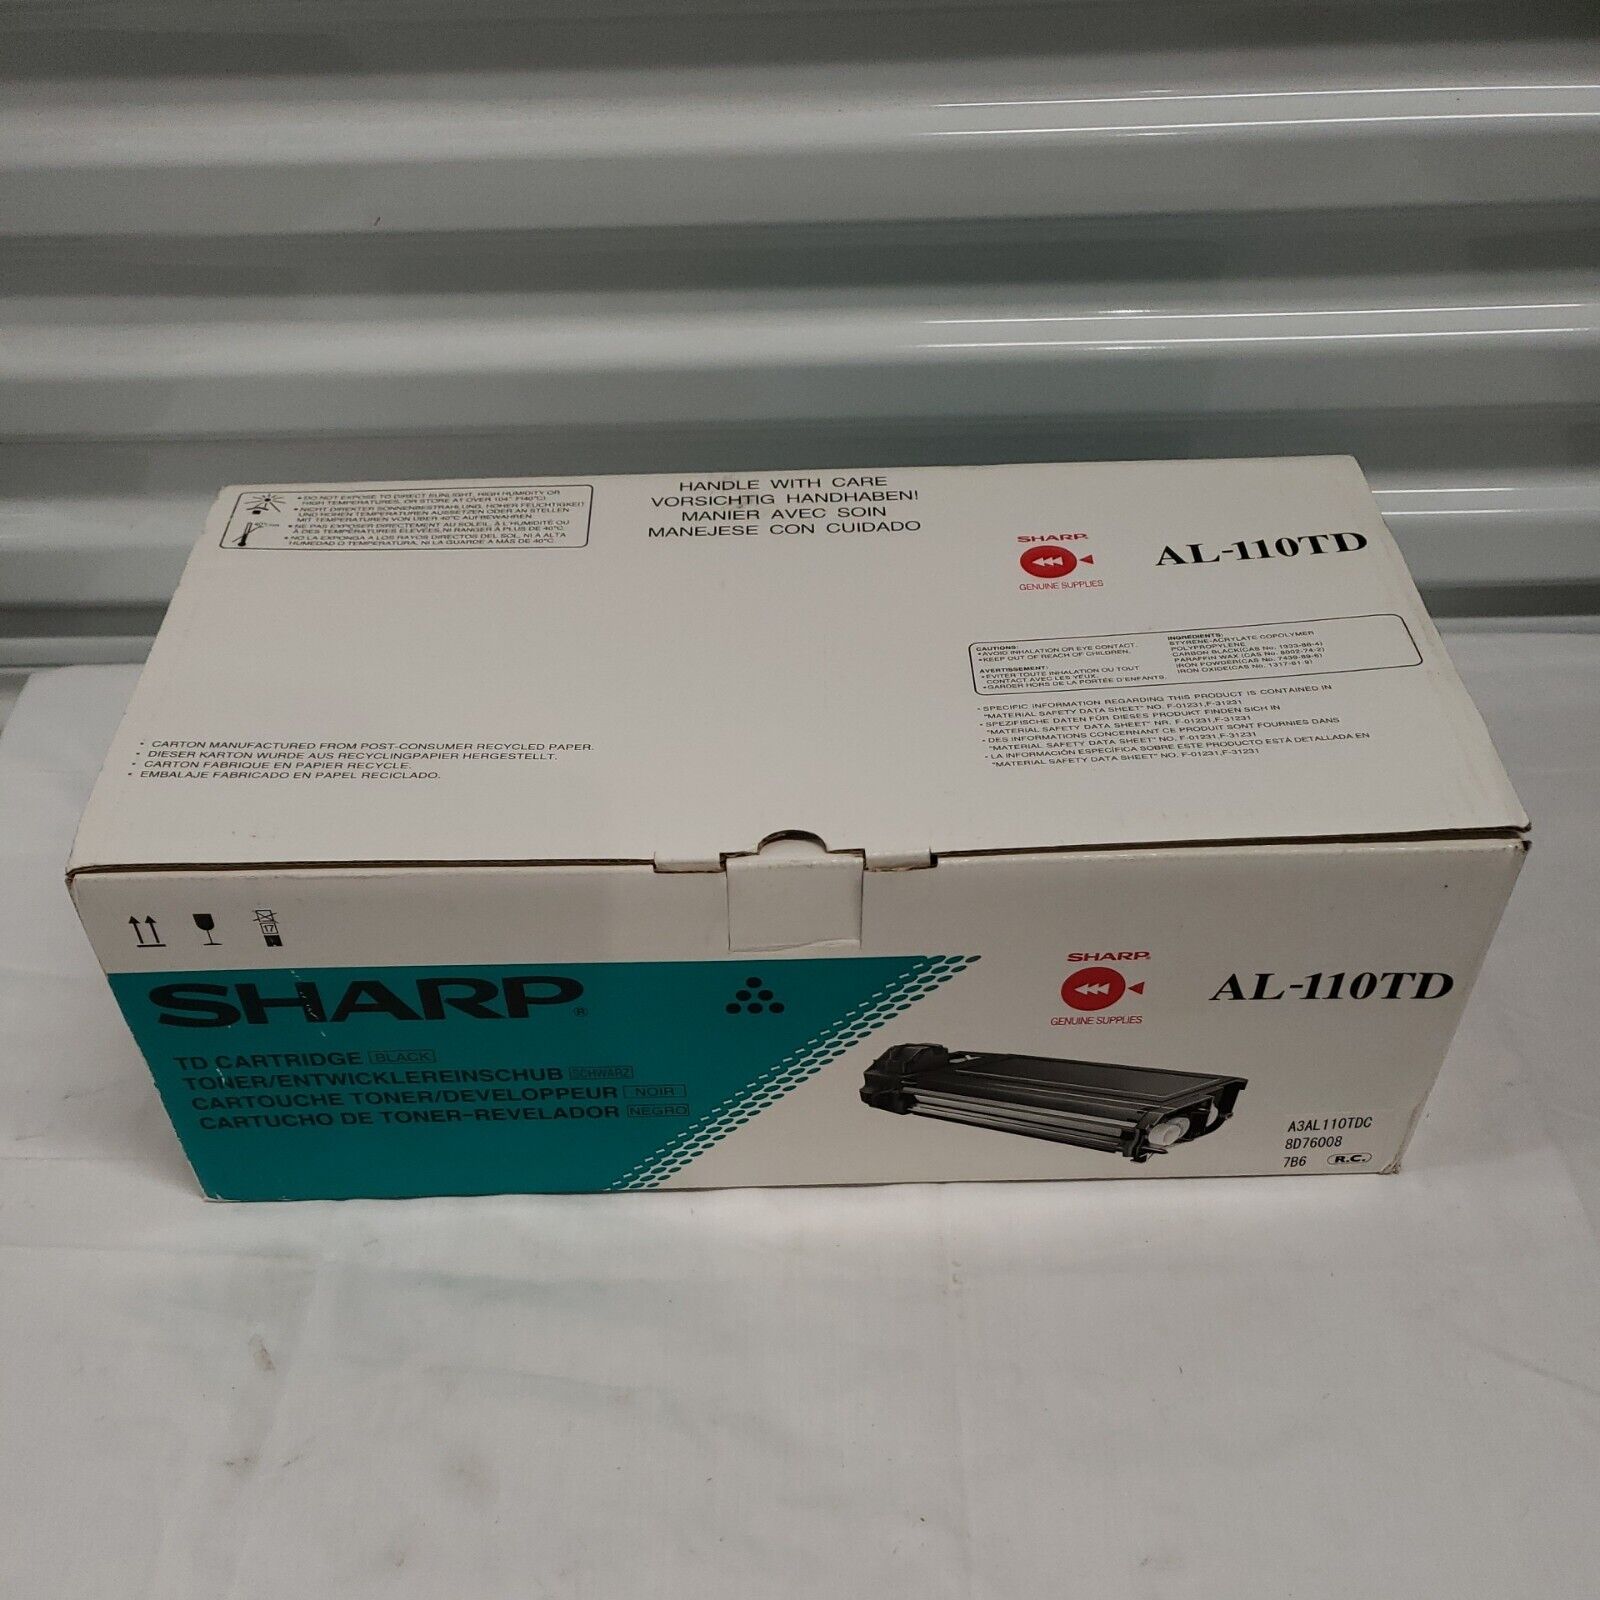 Genuine Sharp AL-110TD Black Toner New Open Box